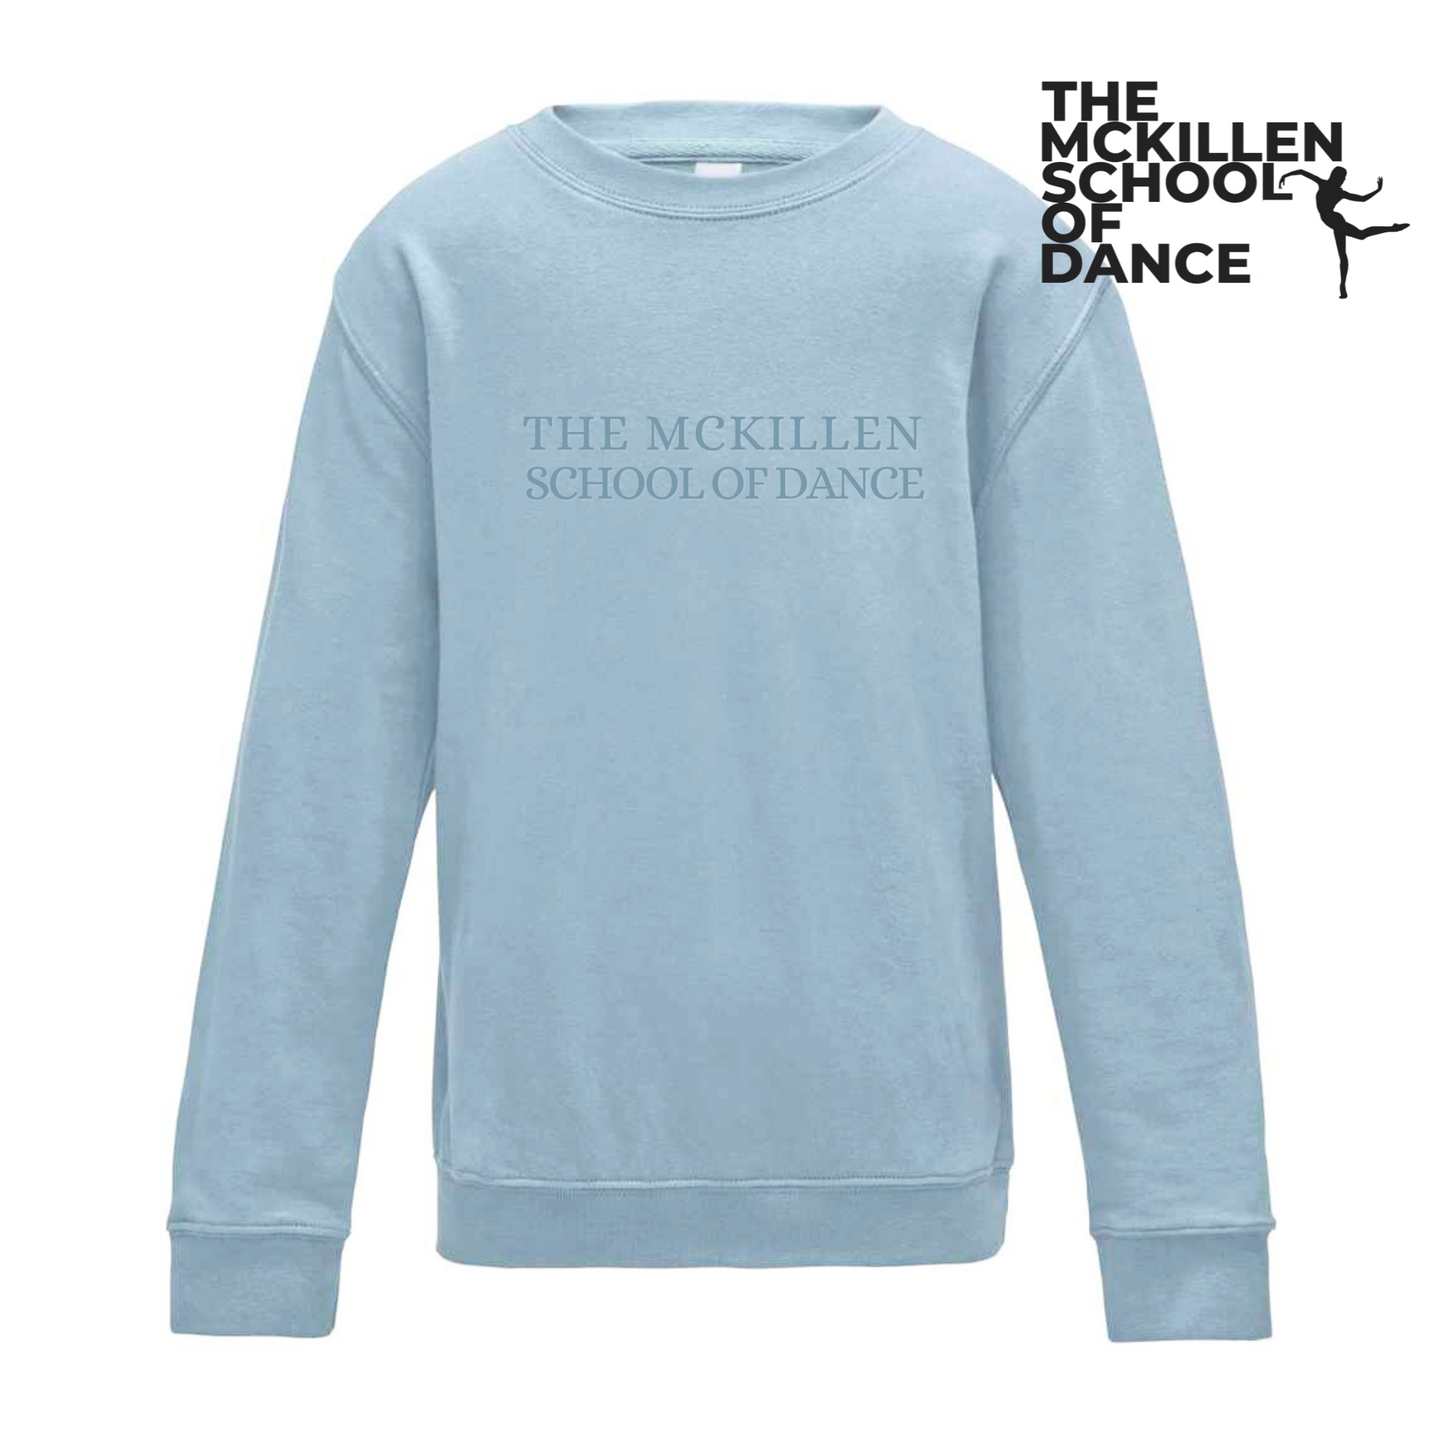 KIDS Embroidered Sweatshirts : The Mckillen School of Dance